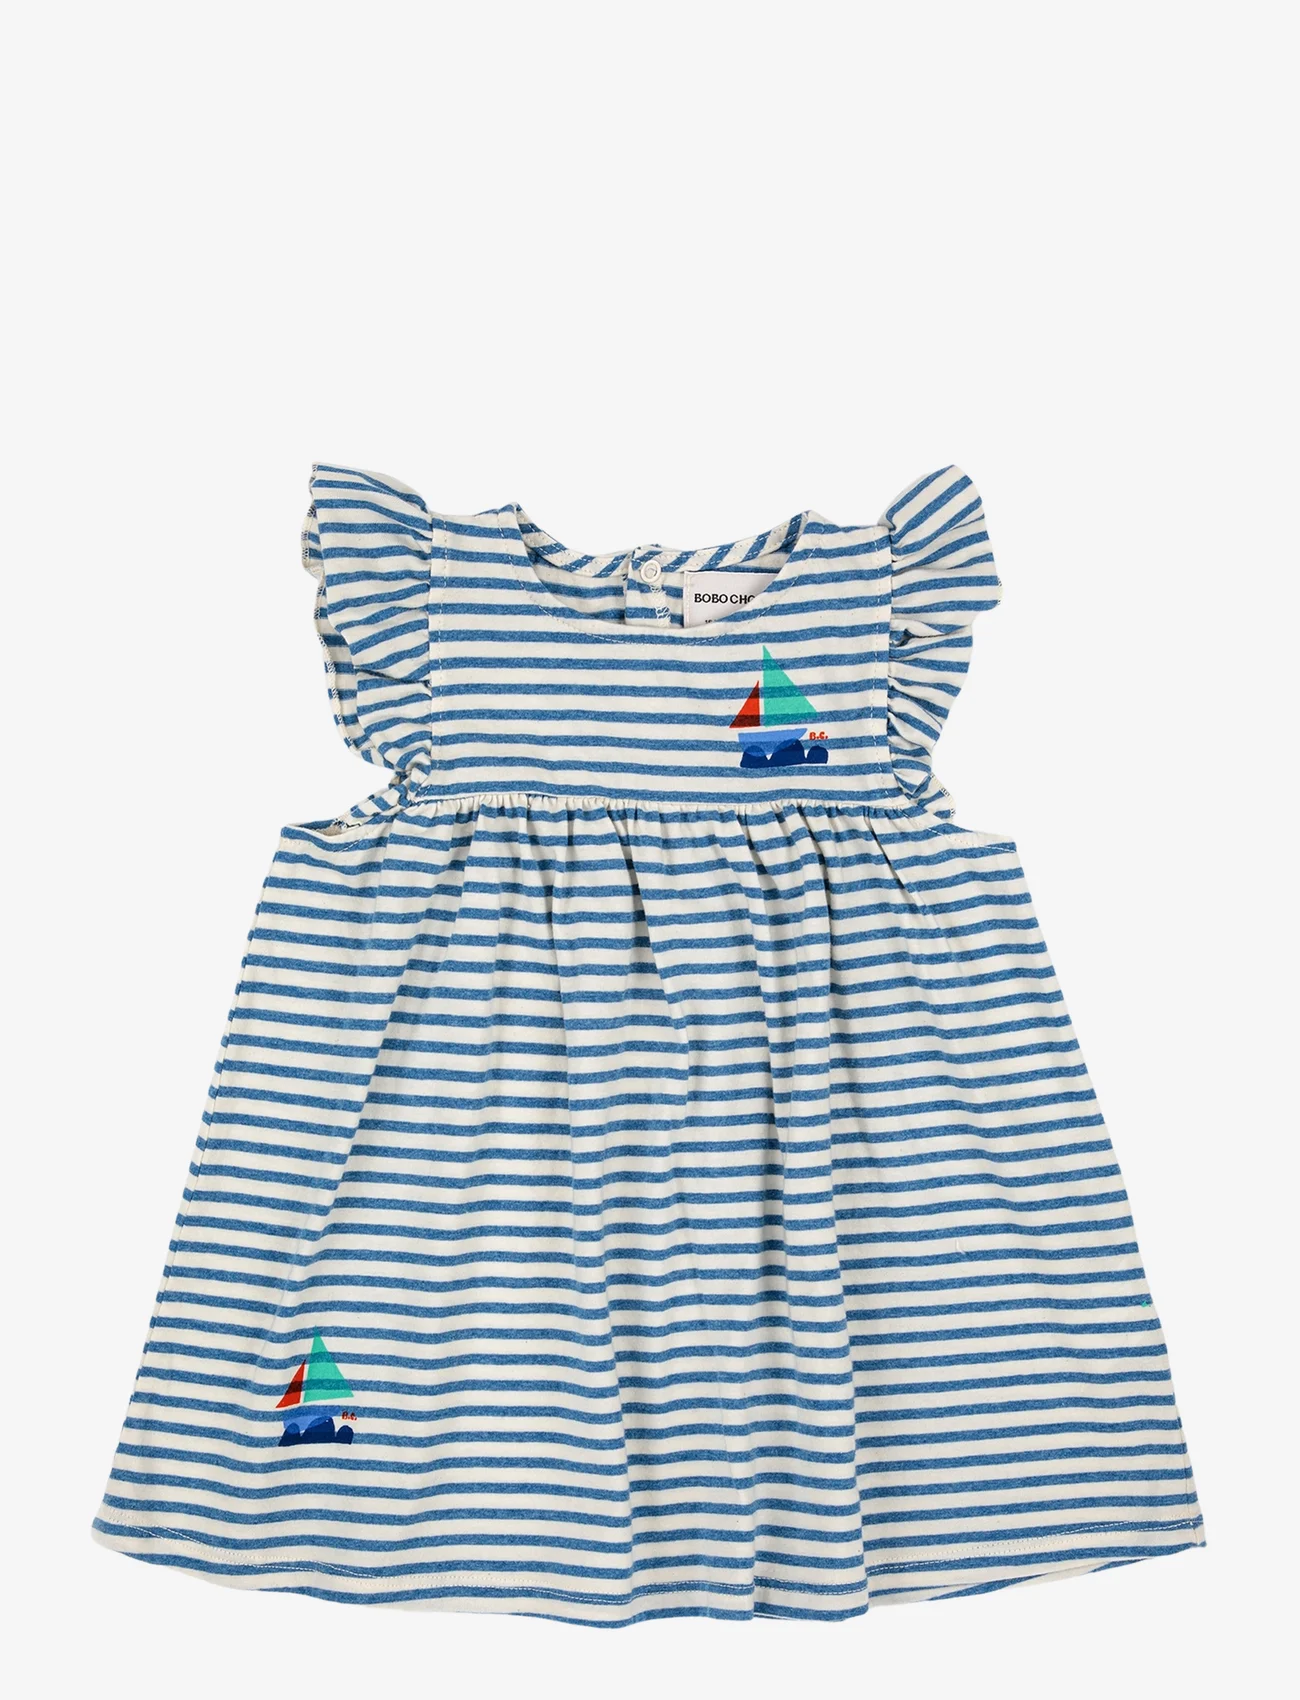 Bobo Choses - Blue Stripes ruffle dress - short-sleeved casual dresses - blue - 0